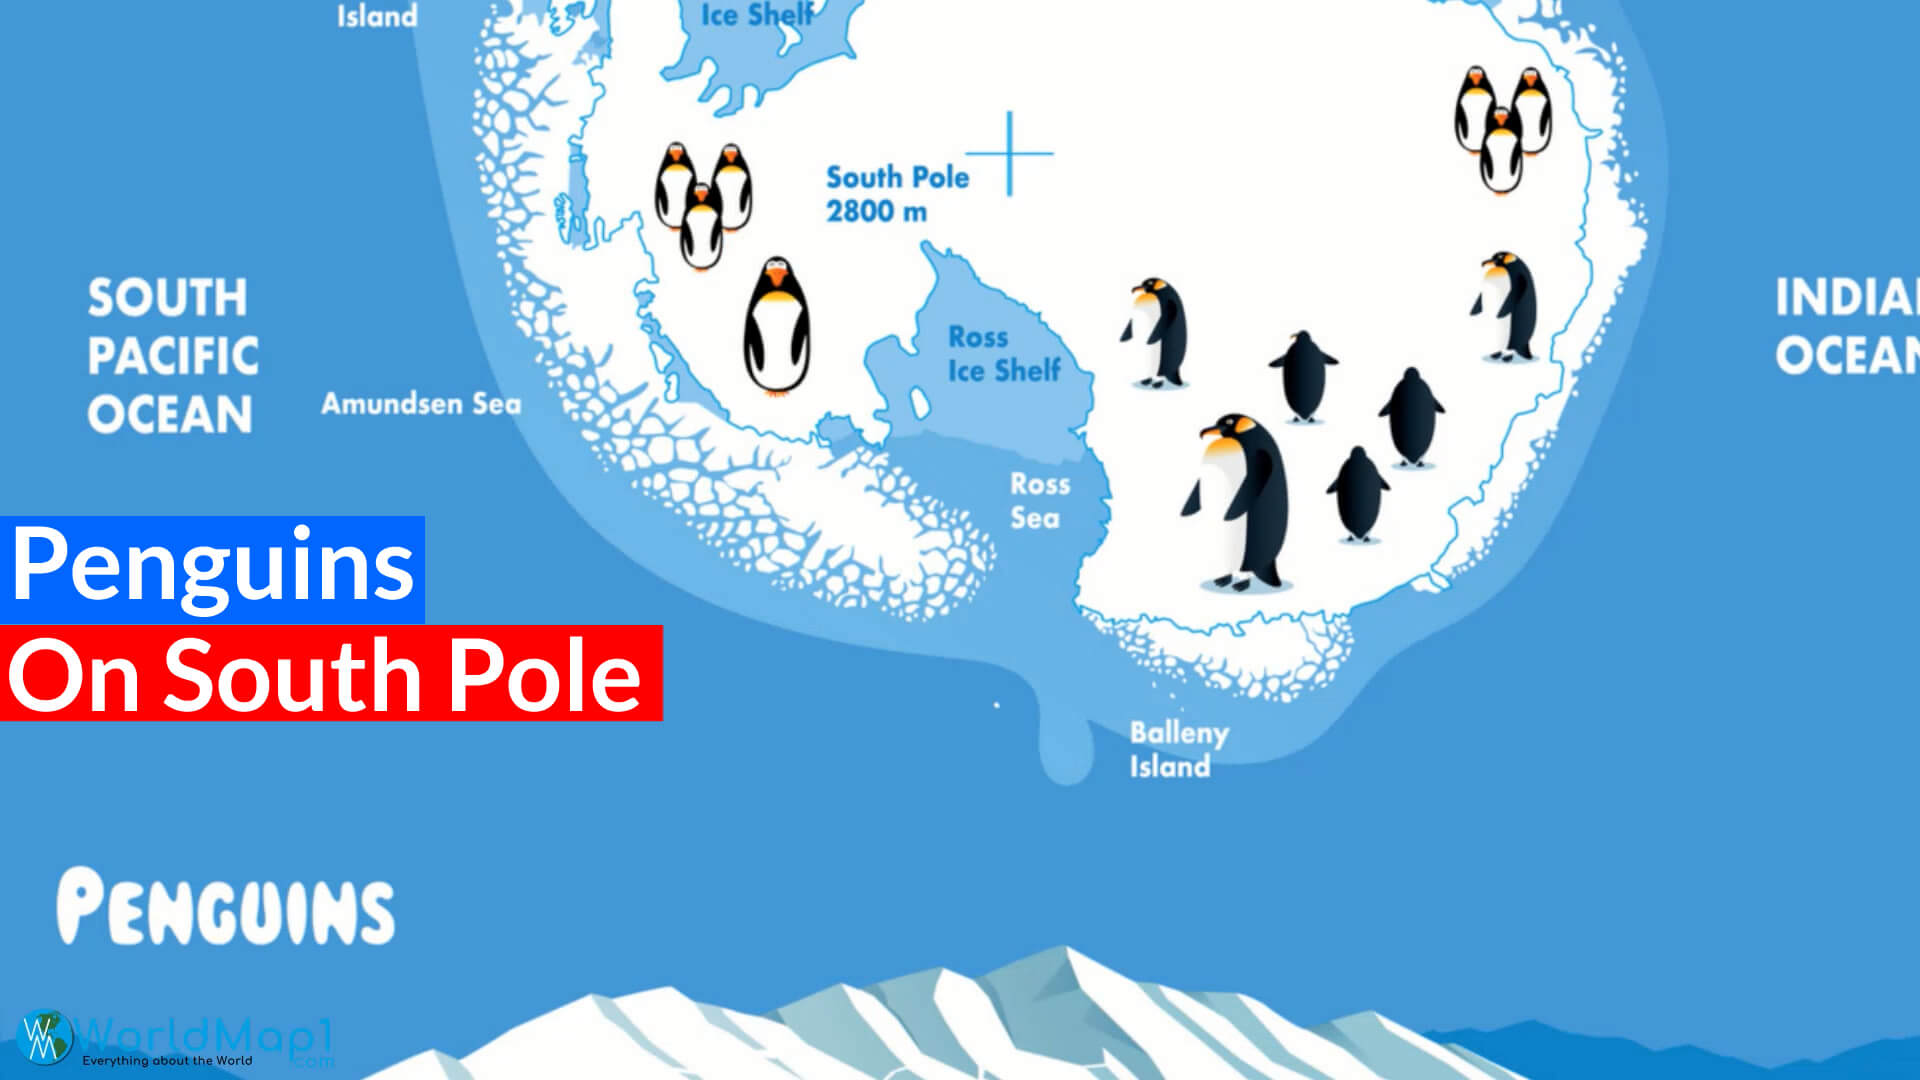 Penguins on South Pole